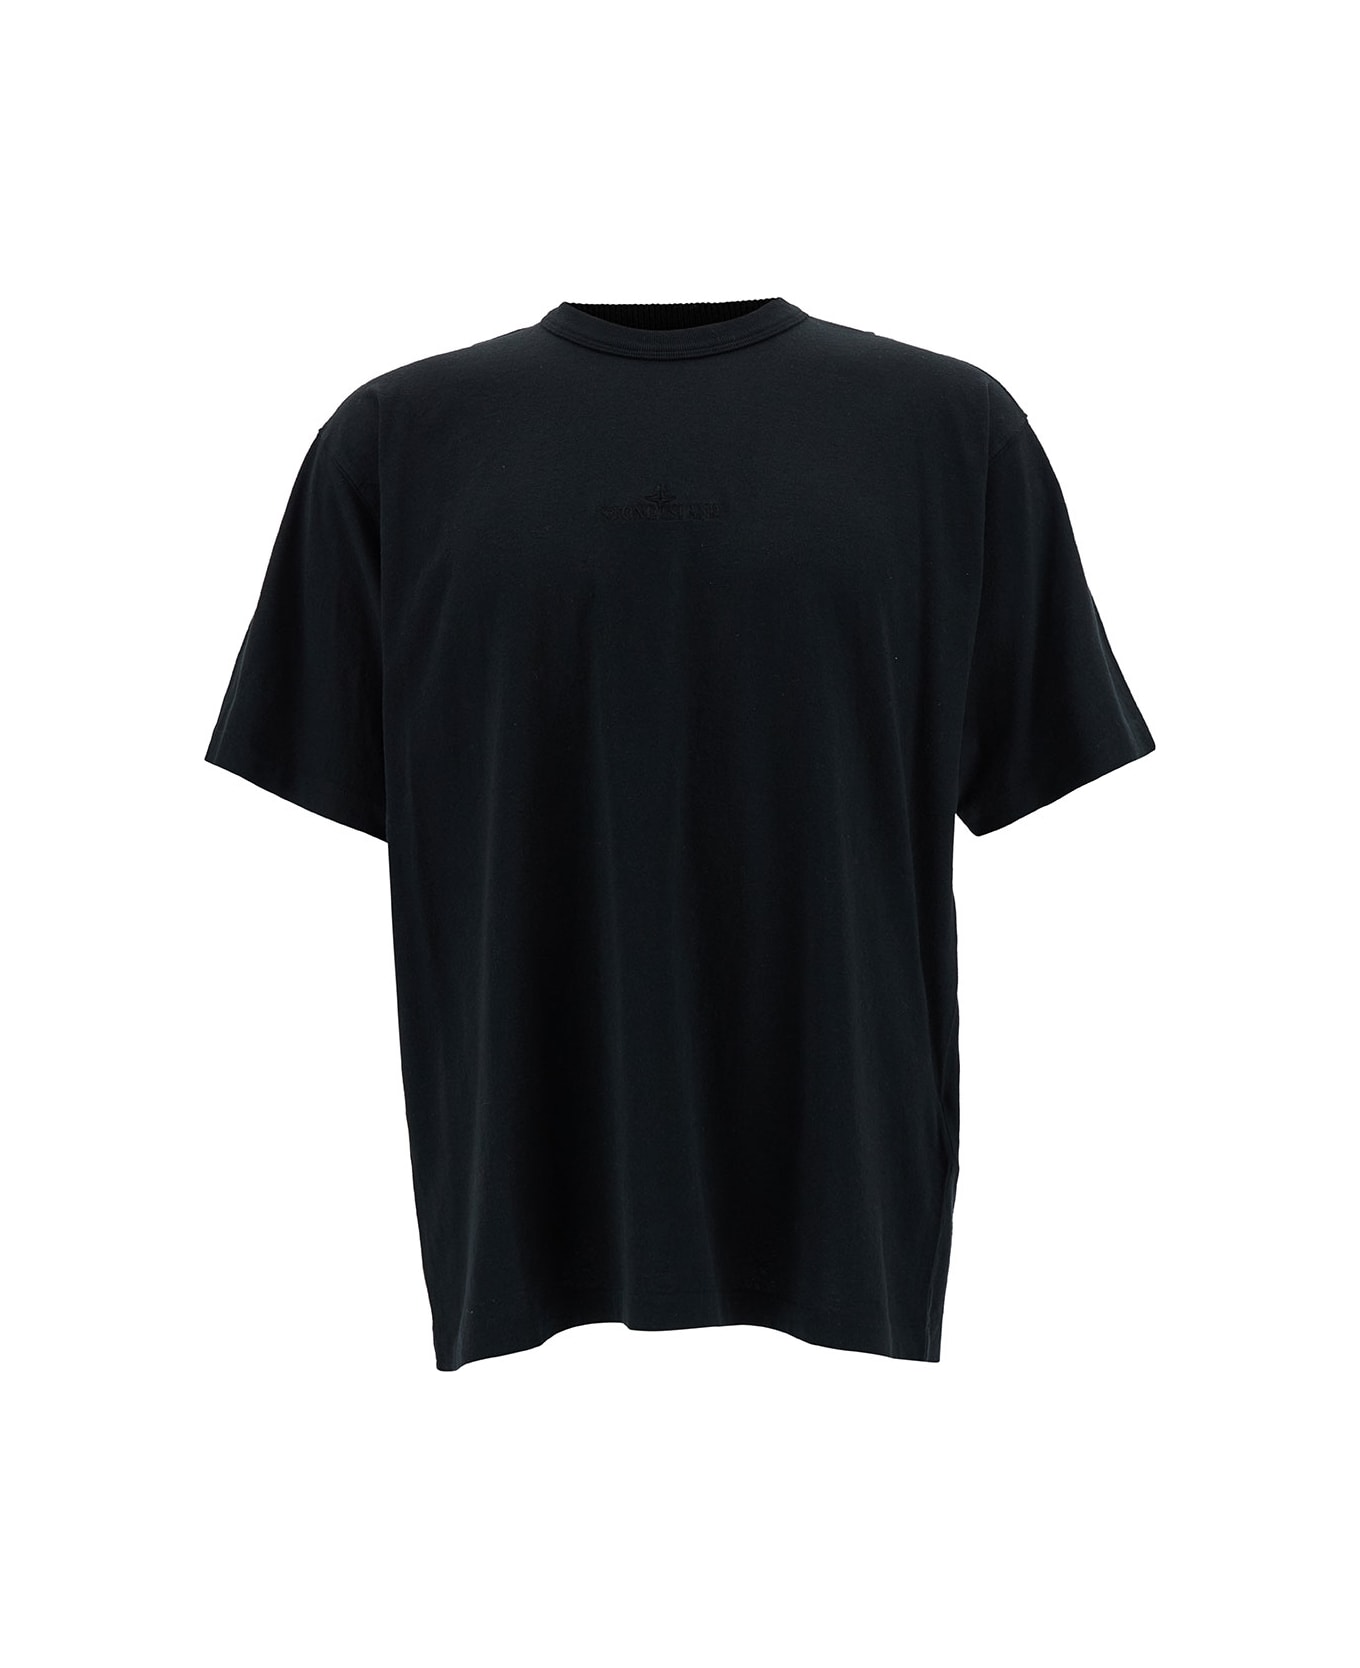 Stone Island Black Crew Neck T-shirt In Cotton Man - Black